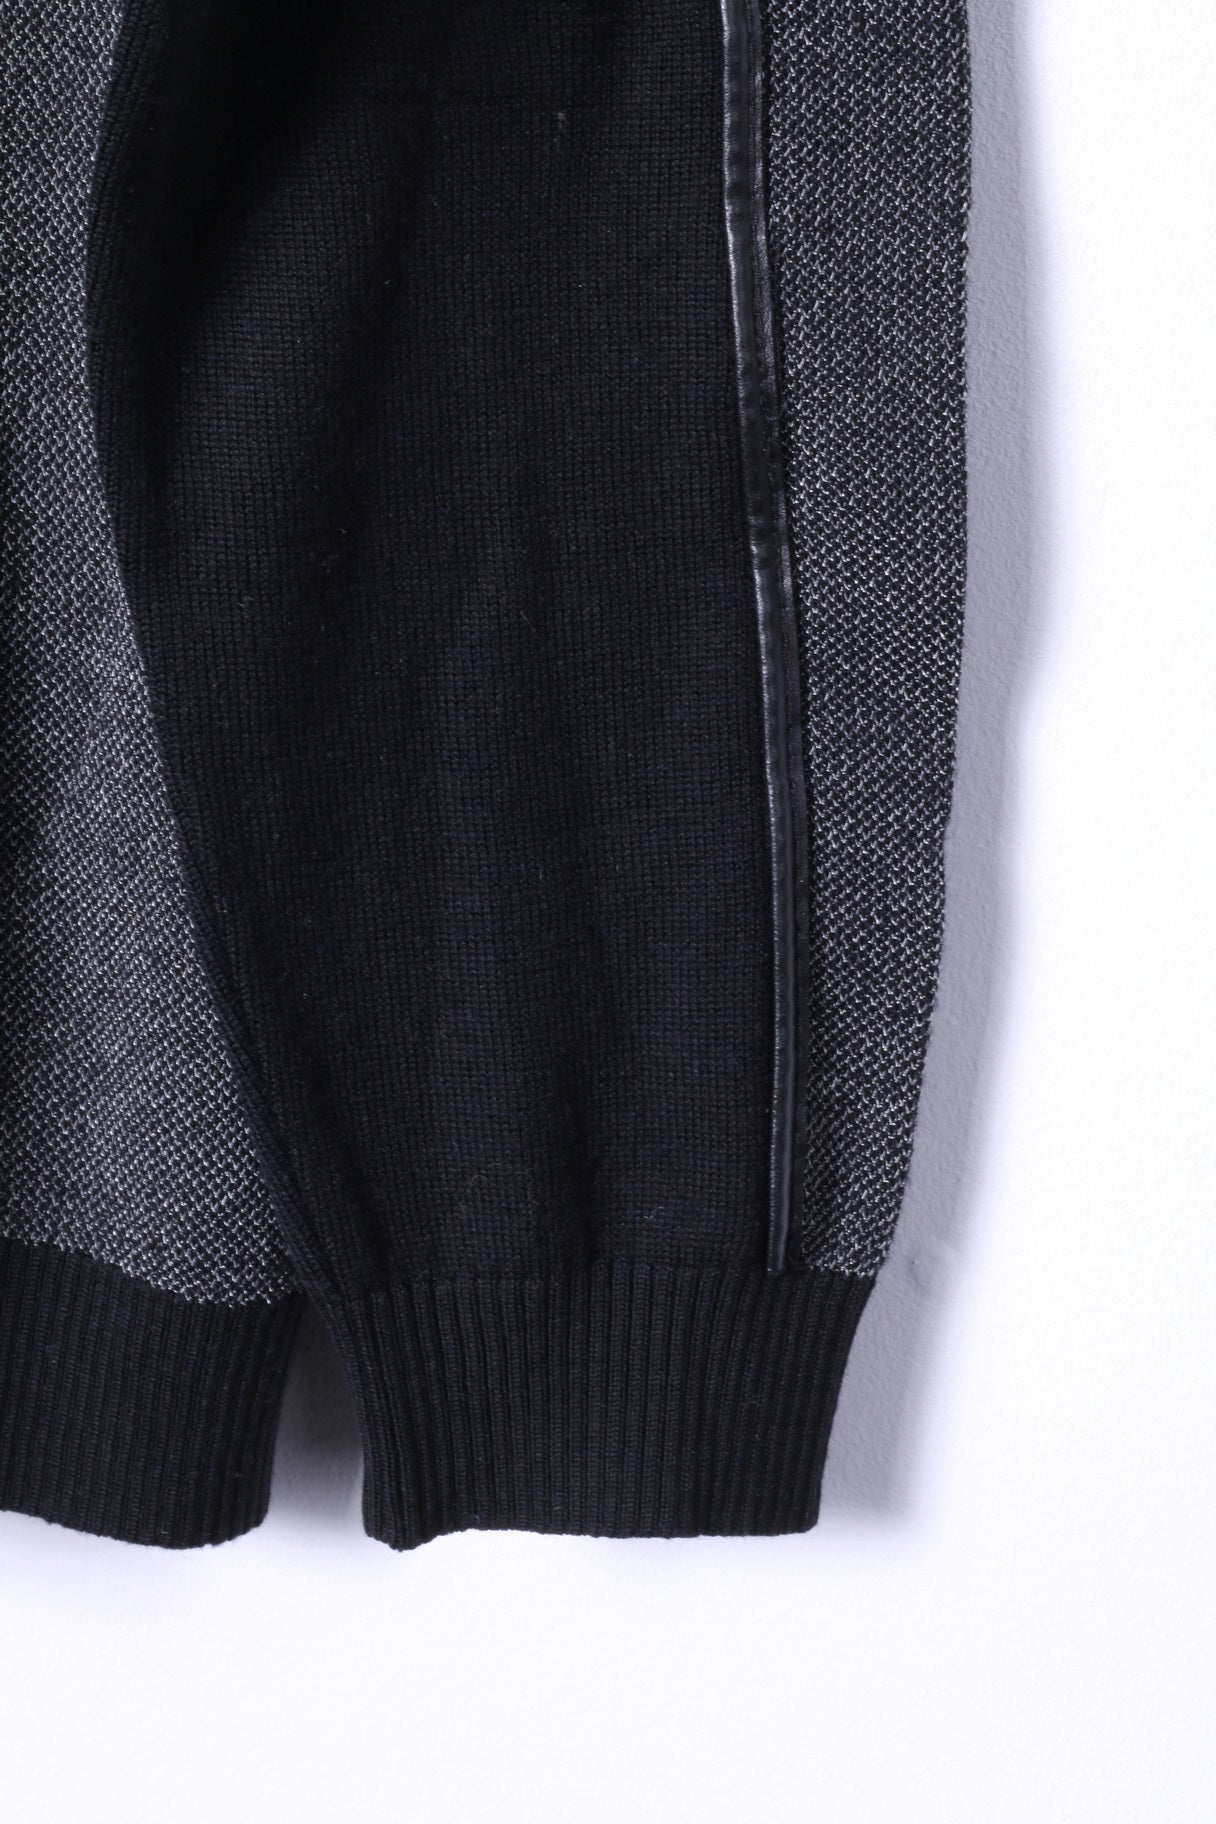 Verri Milano Mens 56 XL Jumper Black Wool Zip Neck Light Sweater Stretch Top